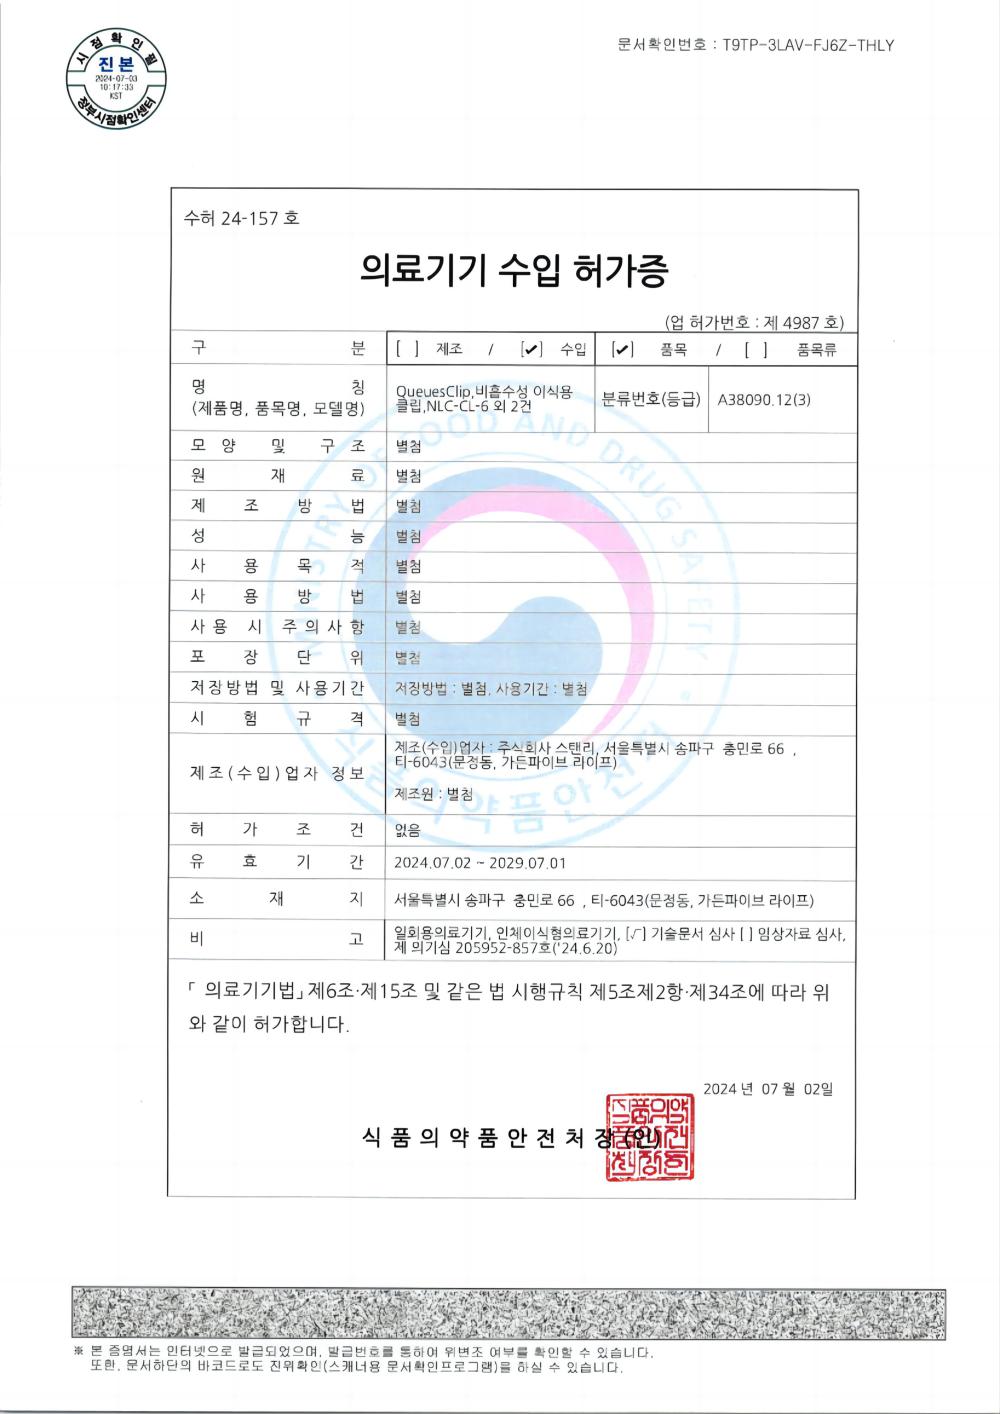 Medical Device Import License For QueuesClip™  Multiple Polymer Ligating Clips-Korea